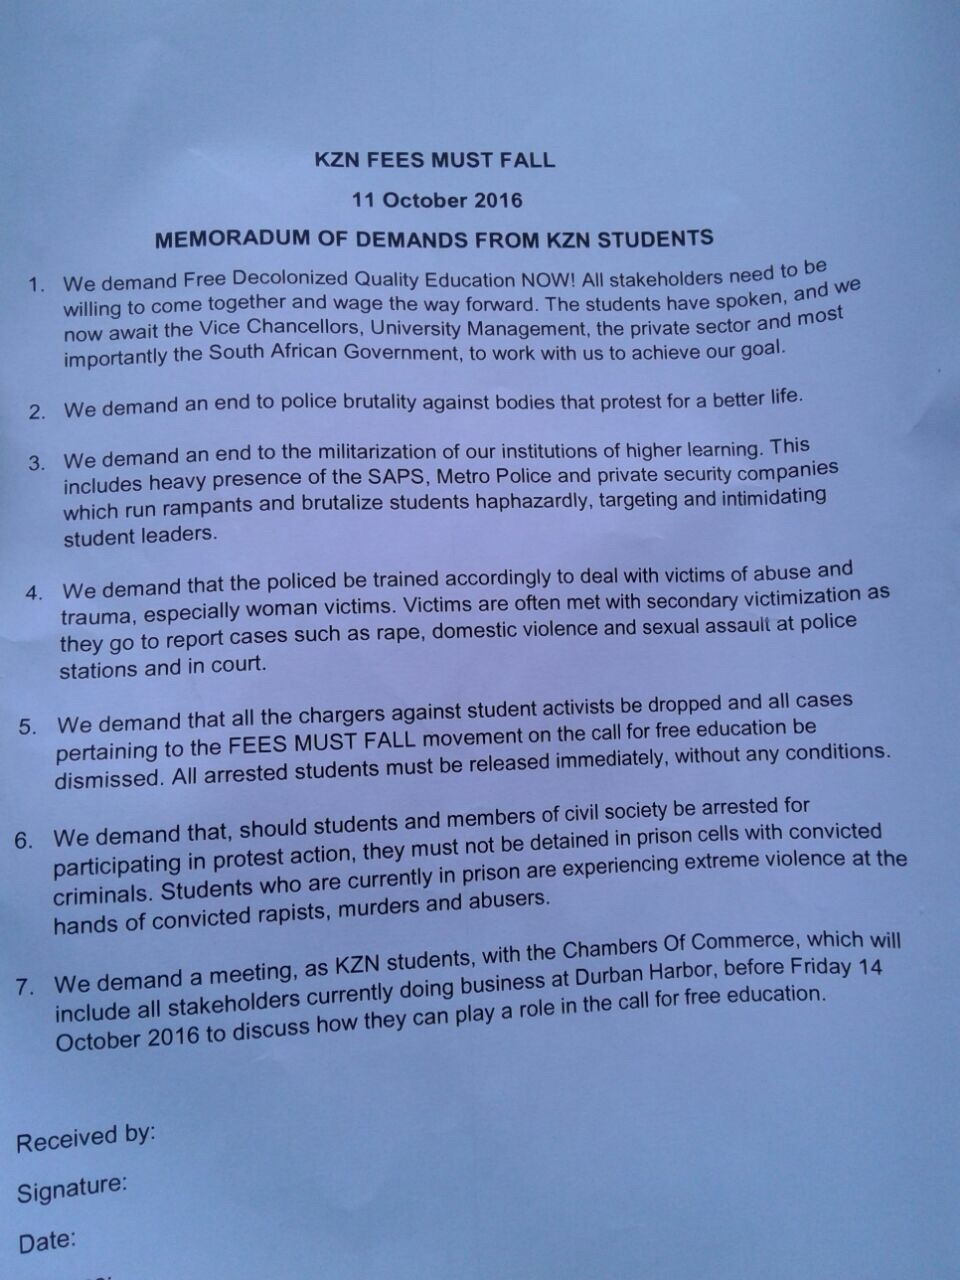 Memorandum of student demands handed to Chamber of Commerce. #KZNFMF